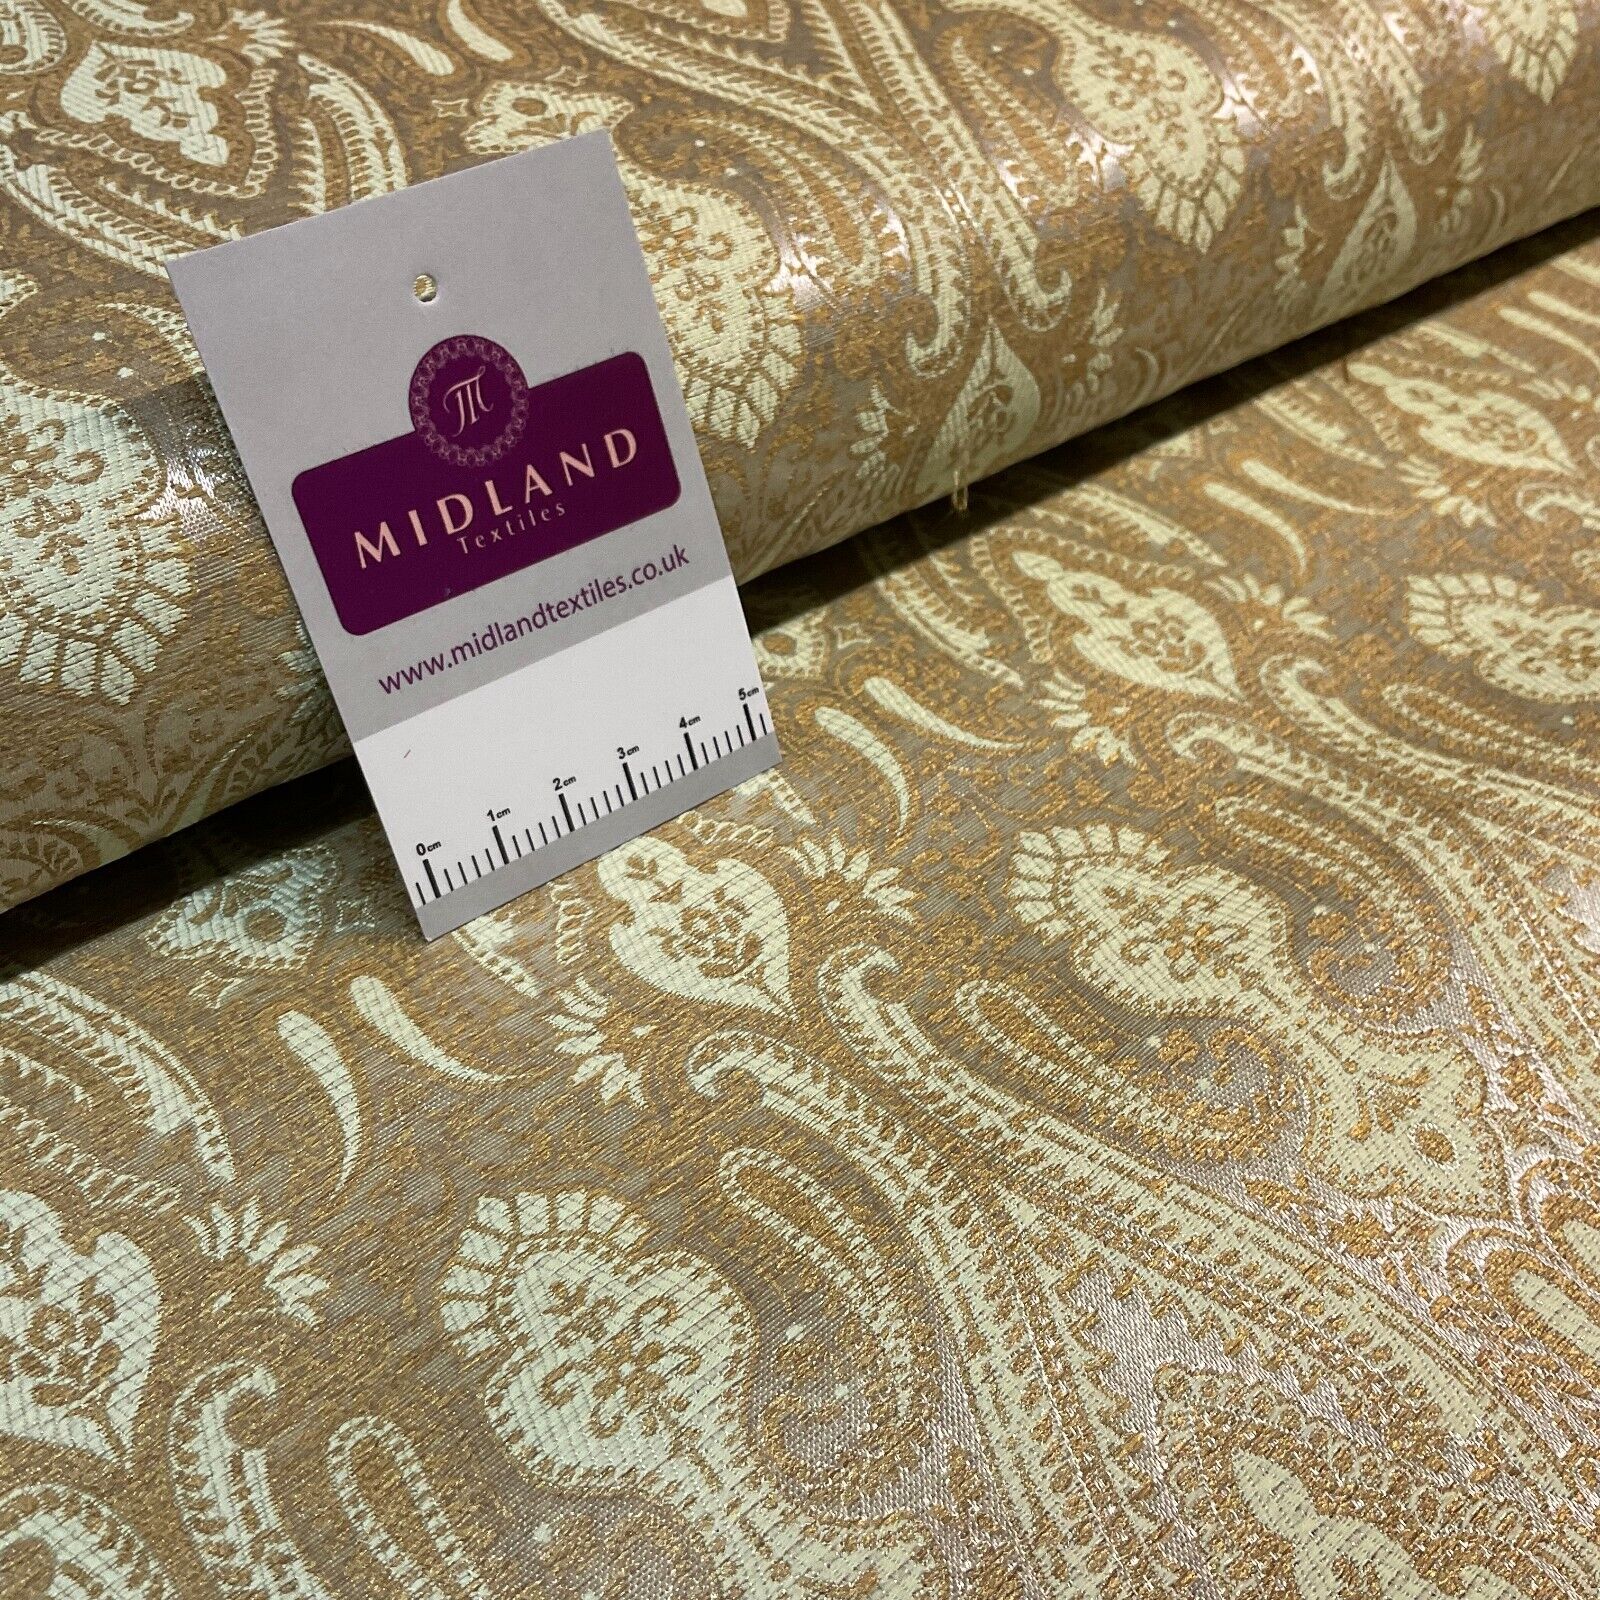 Indian Banarsi Brocade wedding double paisley ornate fabric 150cm wide M1728